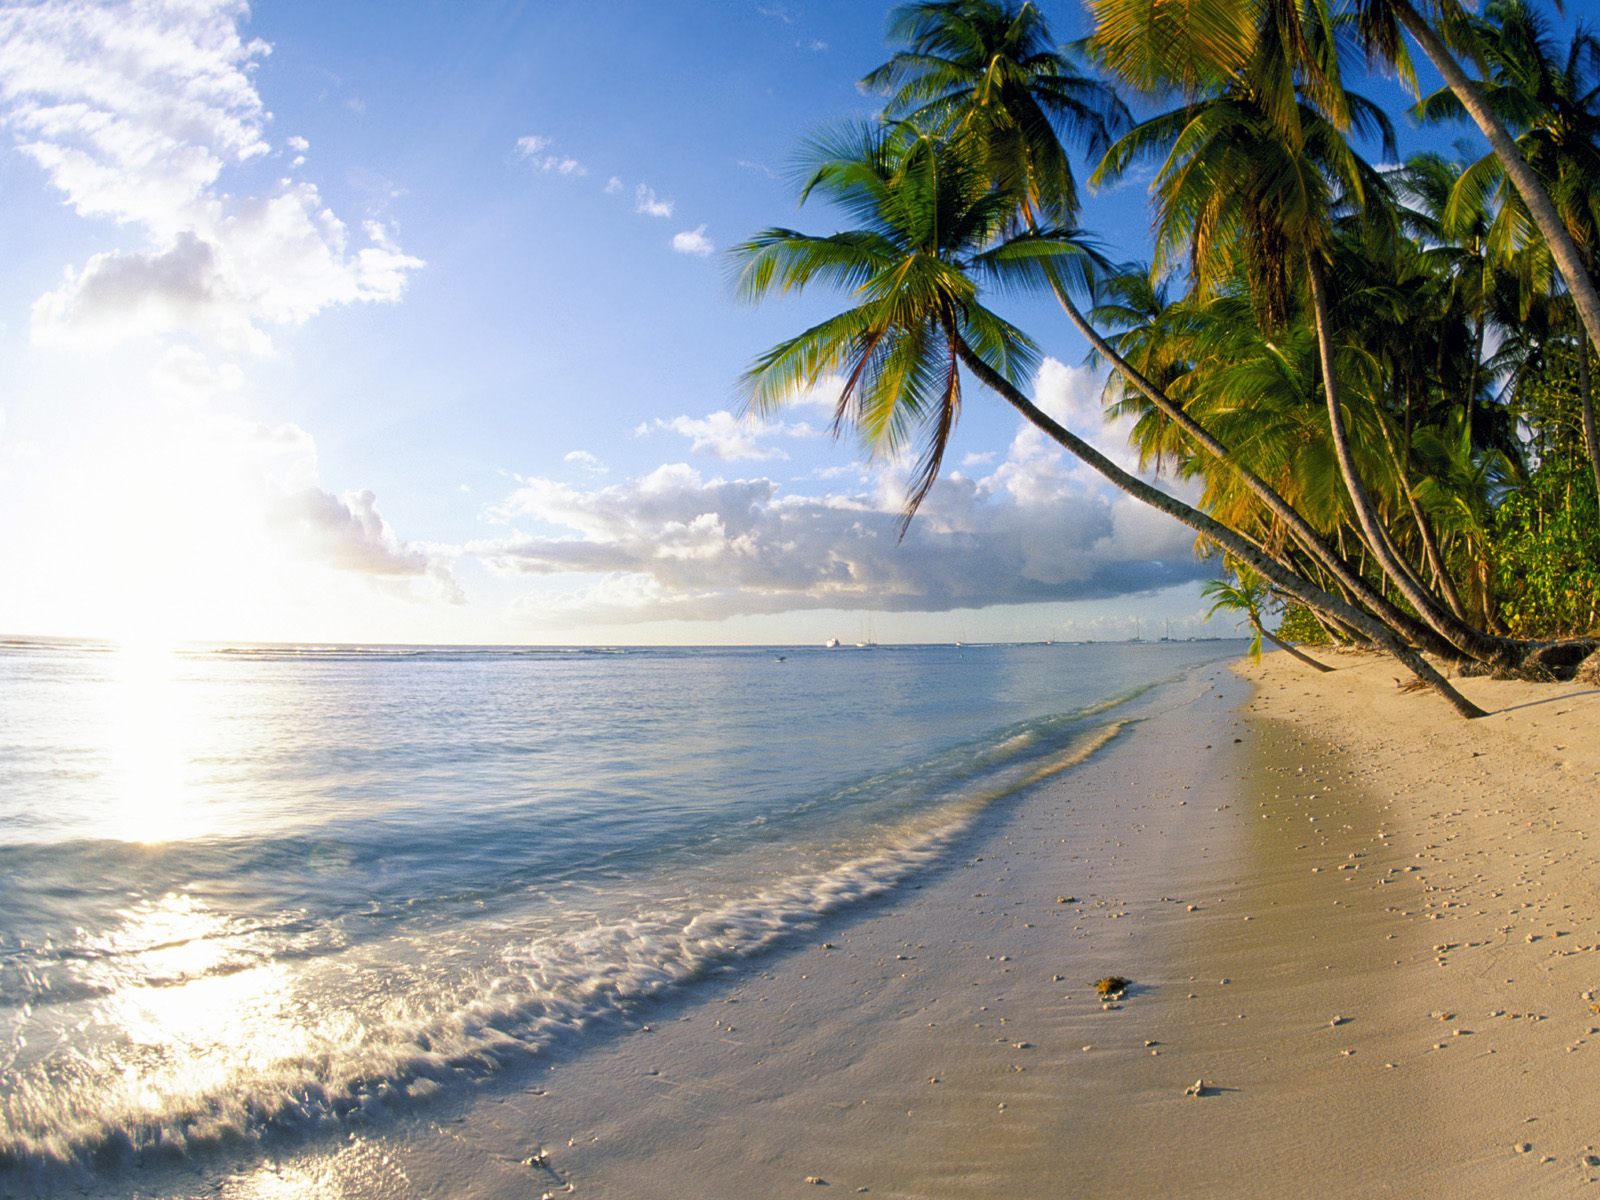 1075780 descargar imagen playa, naturaleza, tierra/naturaleza, océano, árbol: fondos de pantalla y protectores de pantalla gratis